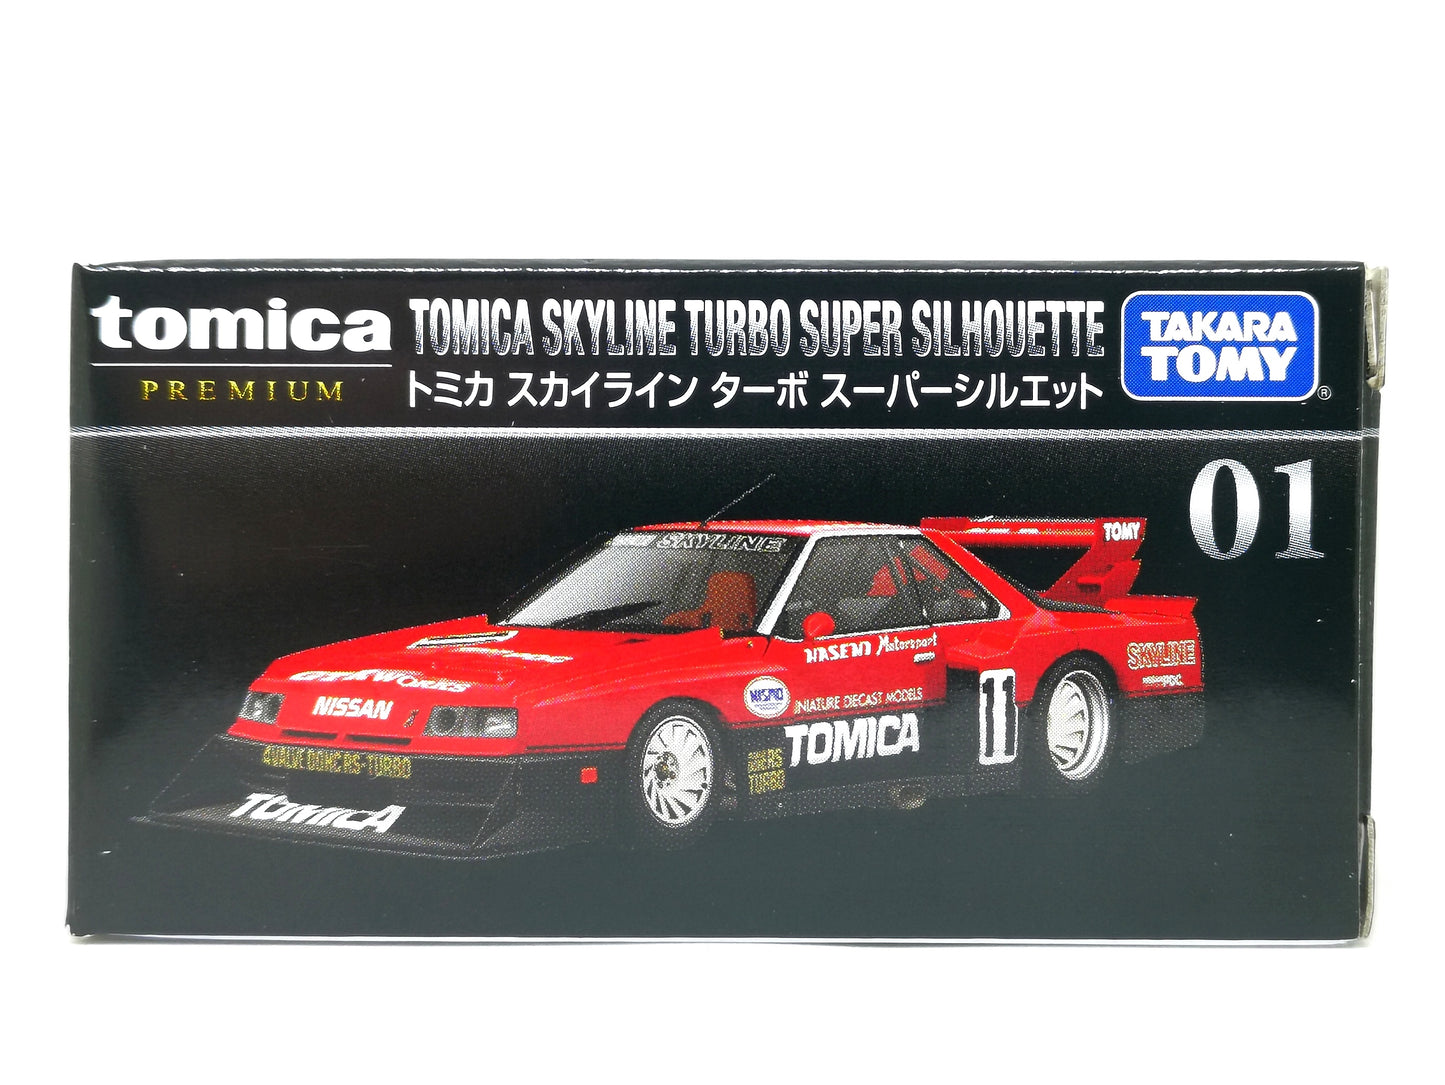 Tomica Premium 01 Nissan Skyline Turbo Super Silhouette 1:67 SCALE NEW IN Box